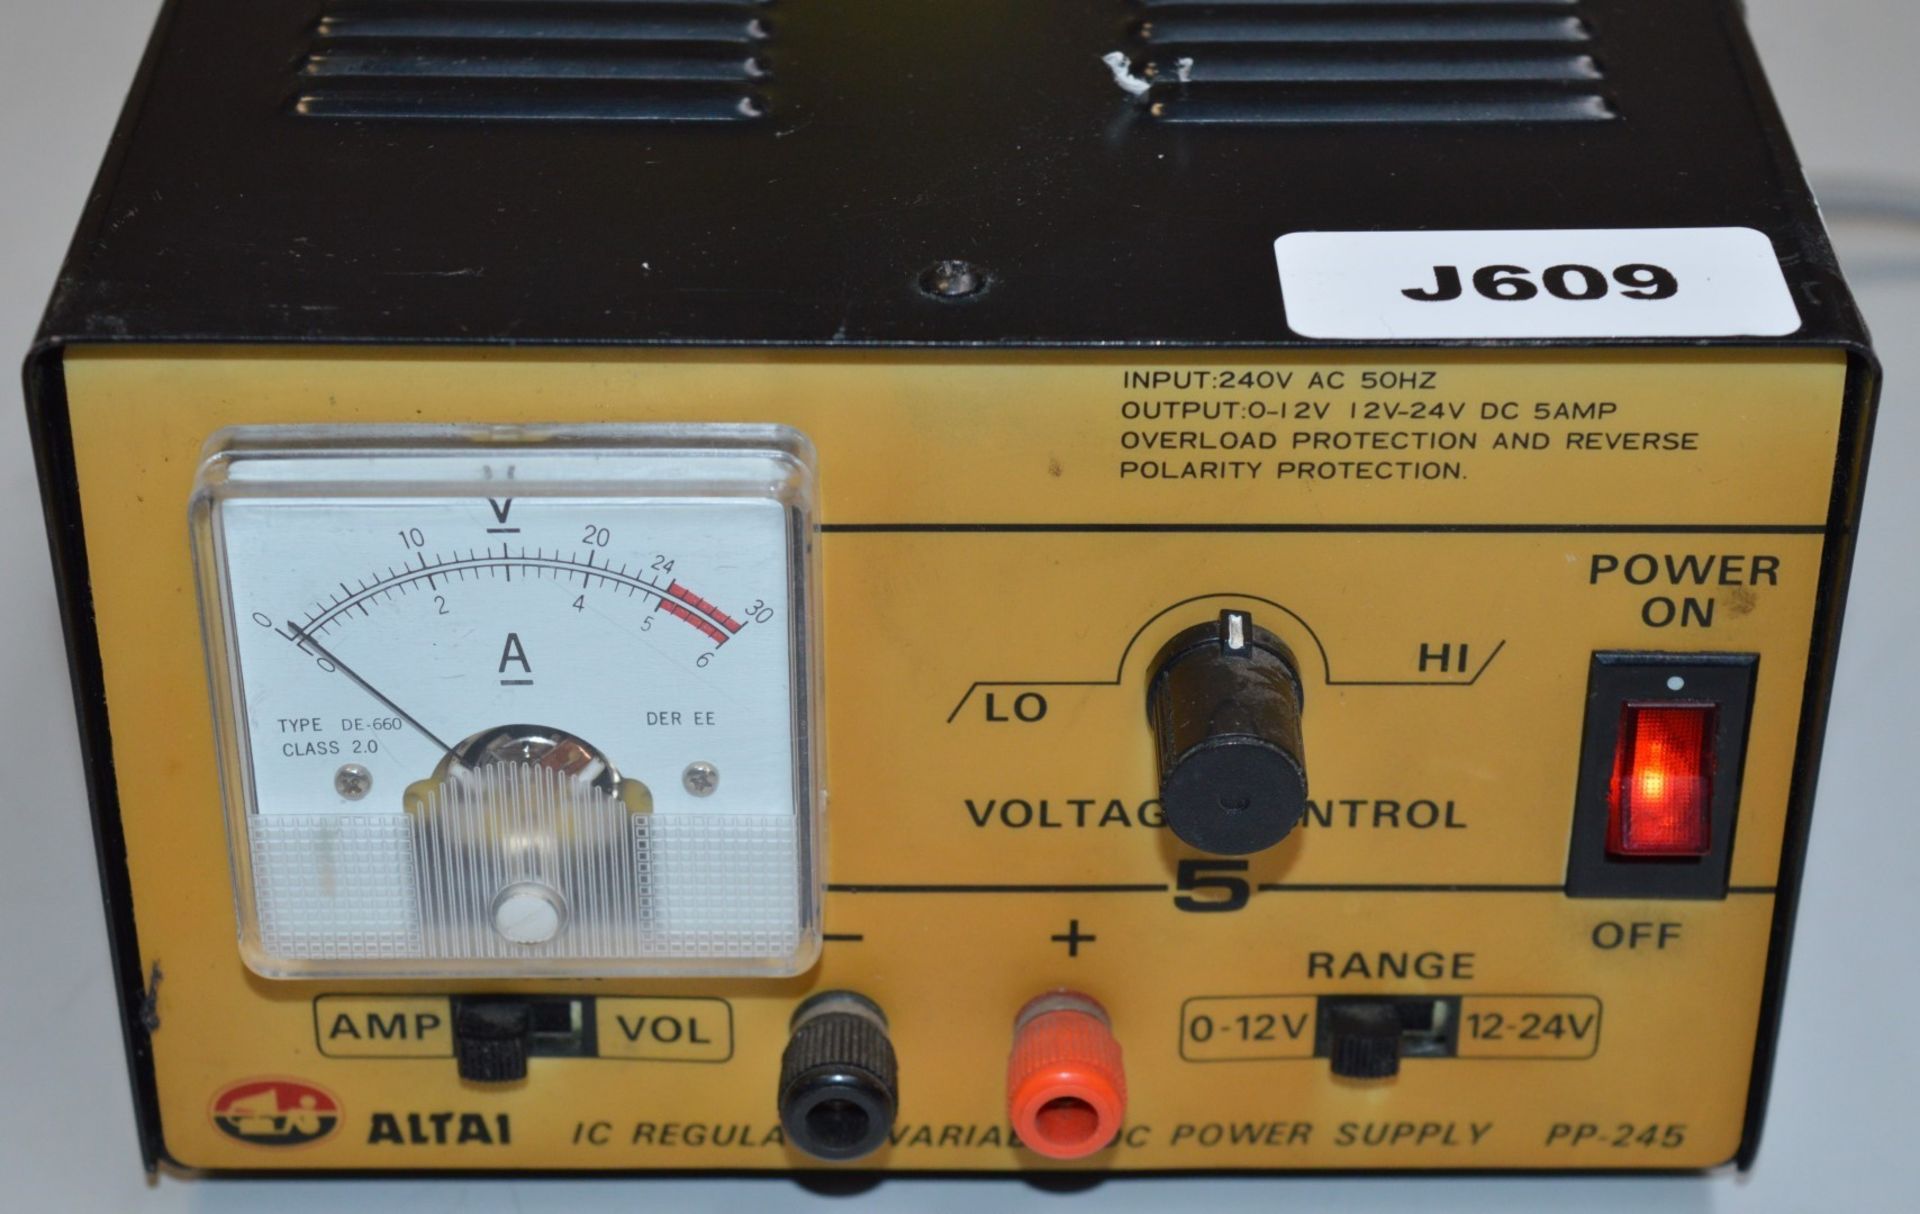 1 x Altai IC Regulated Variable Power Supply - Model PP-245 - Vintage Test Equipment - CL011 - Ref - Bild 2 aus 5